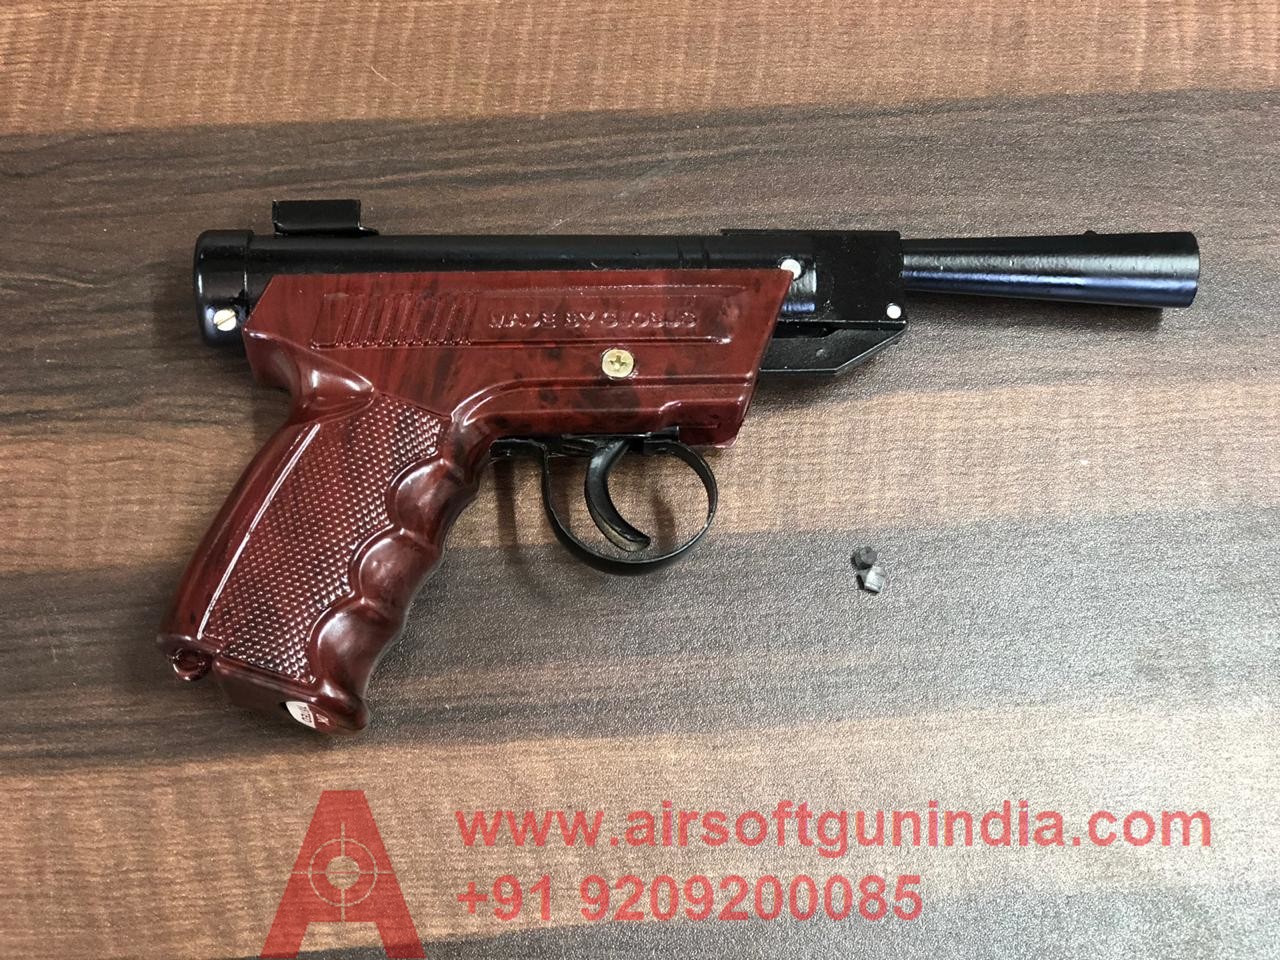 Power Sports Air Pistol By Airsoft Gun India Rose Texture